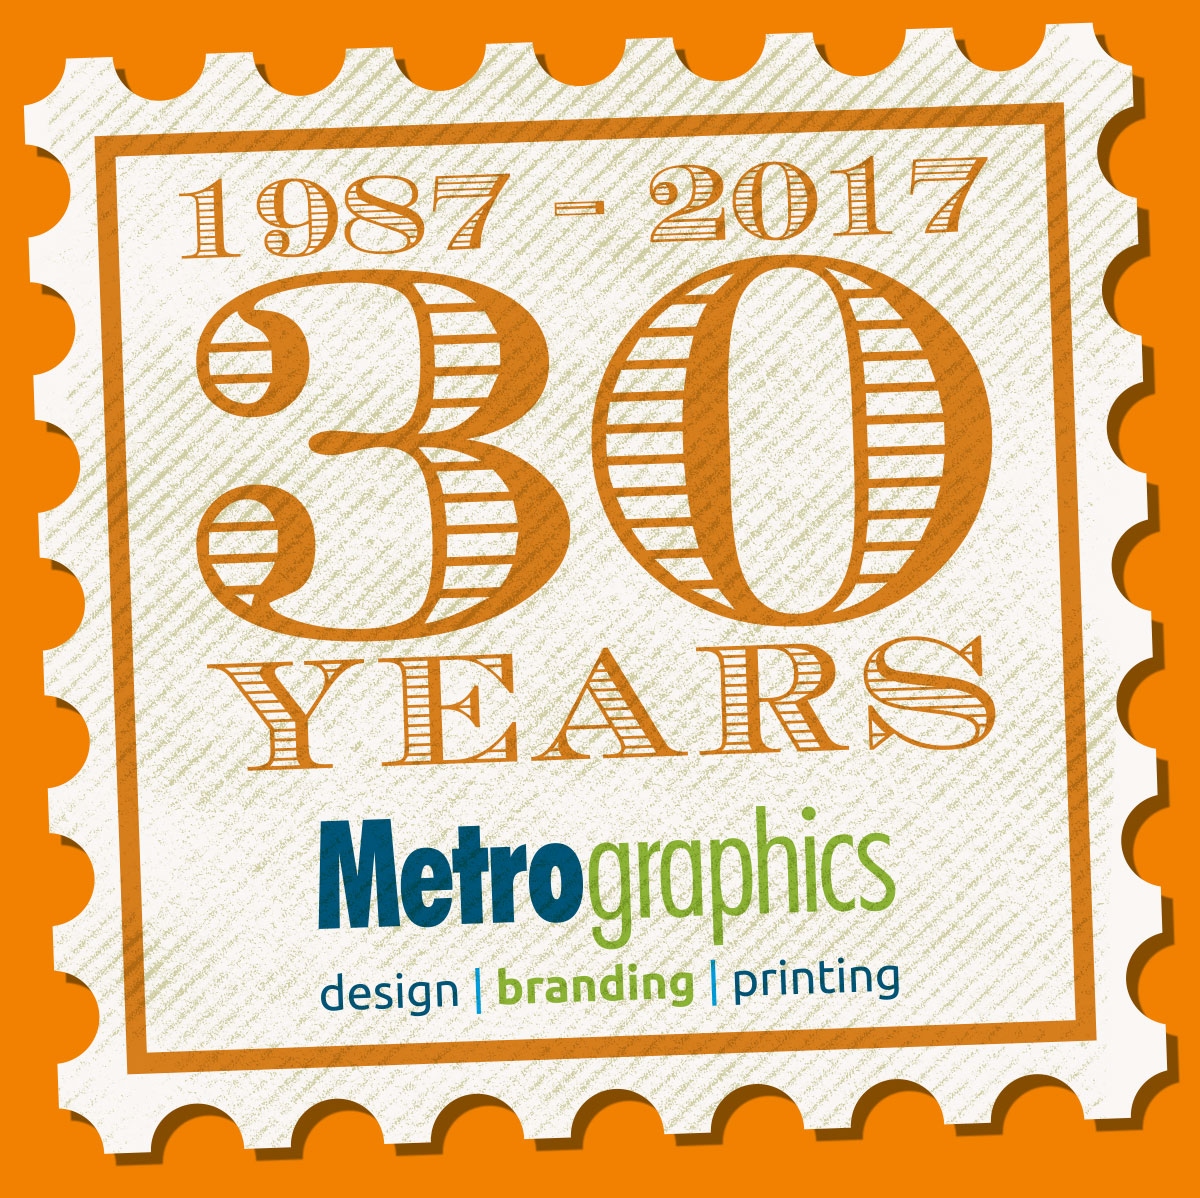 30 years of Metrographics!